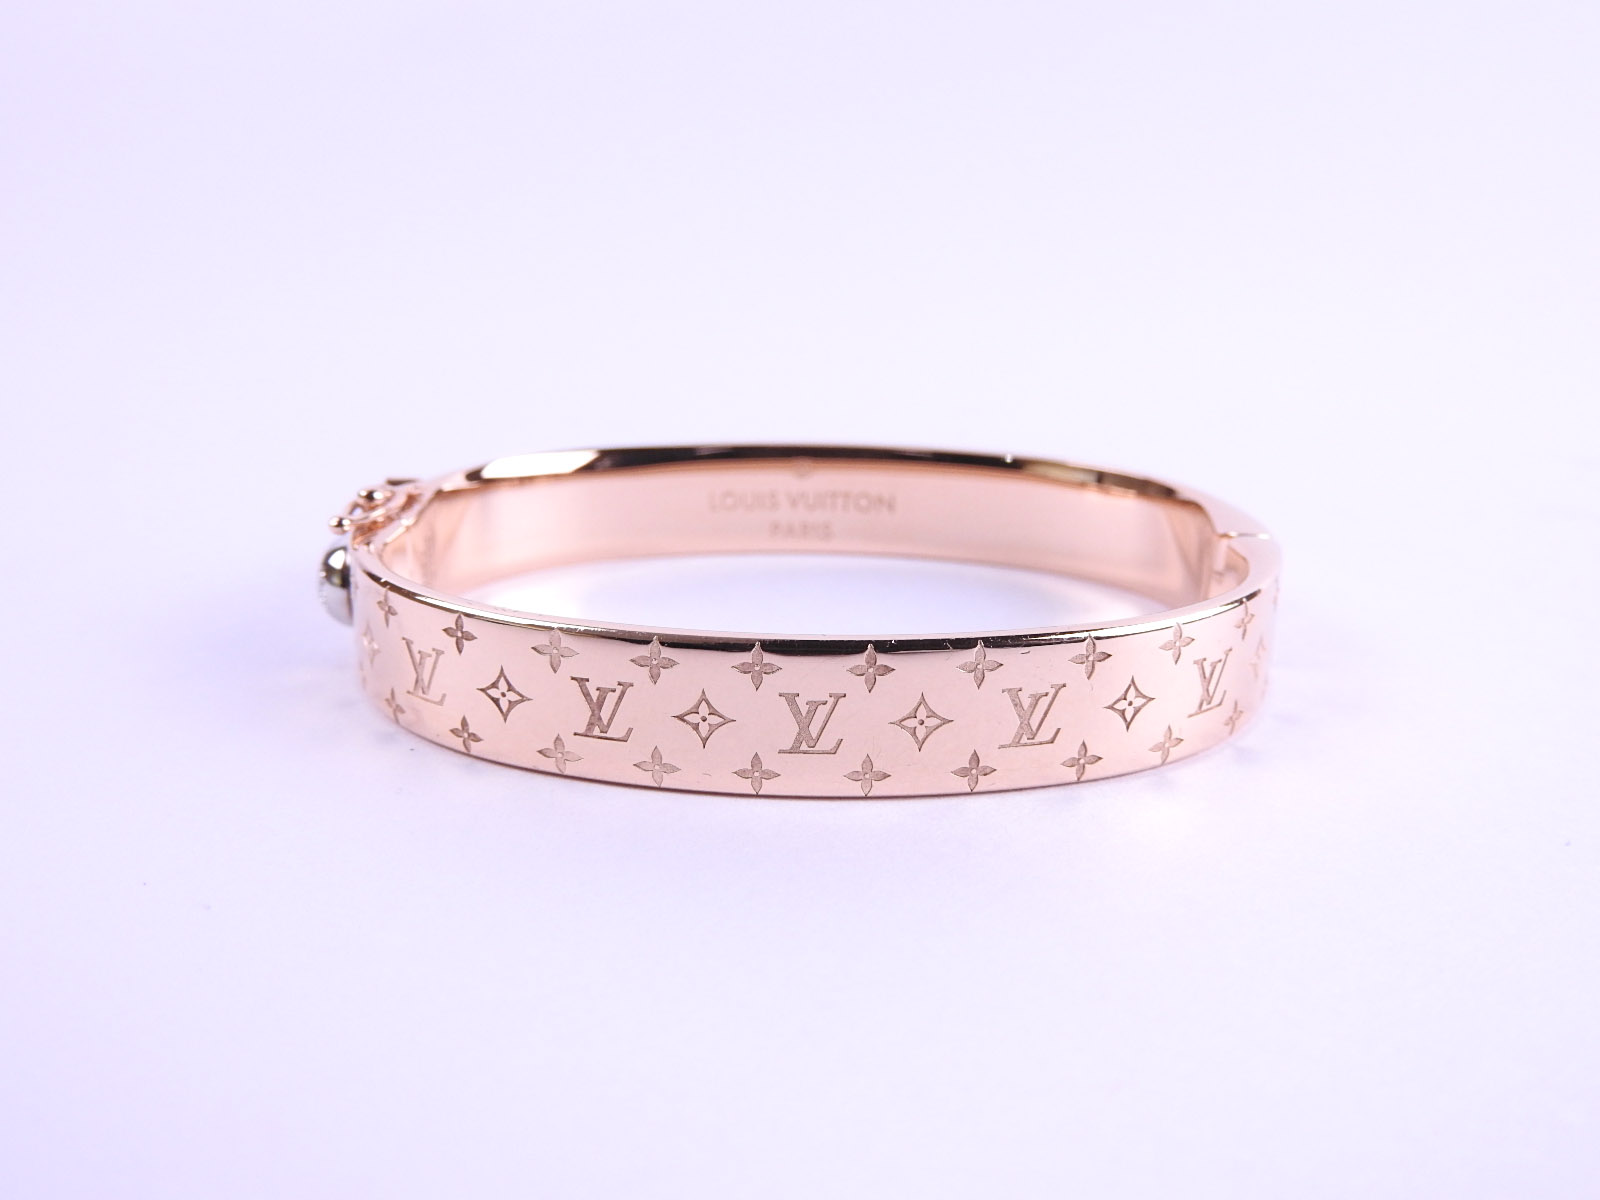 Louis Vuitton Nanogram Cuff Bangle Size S Pink Gold Metal M00253